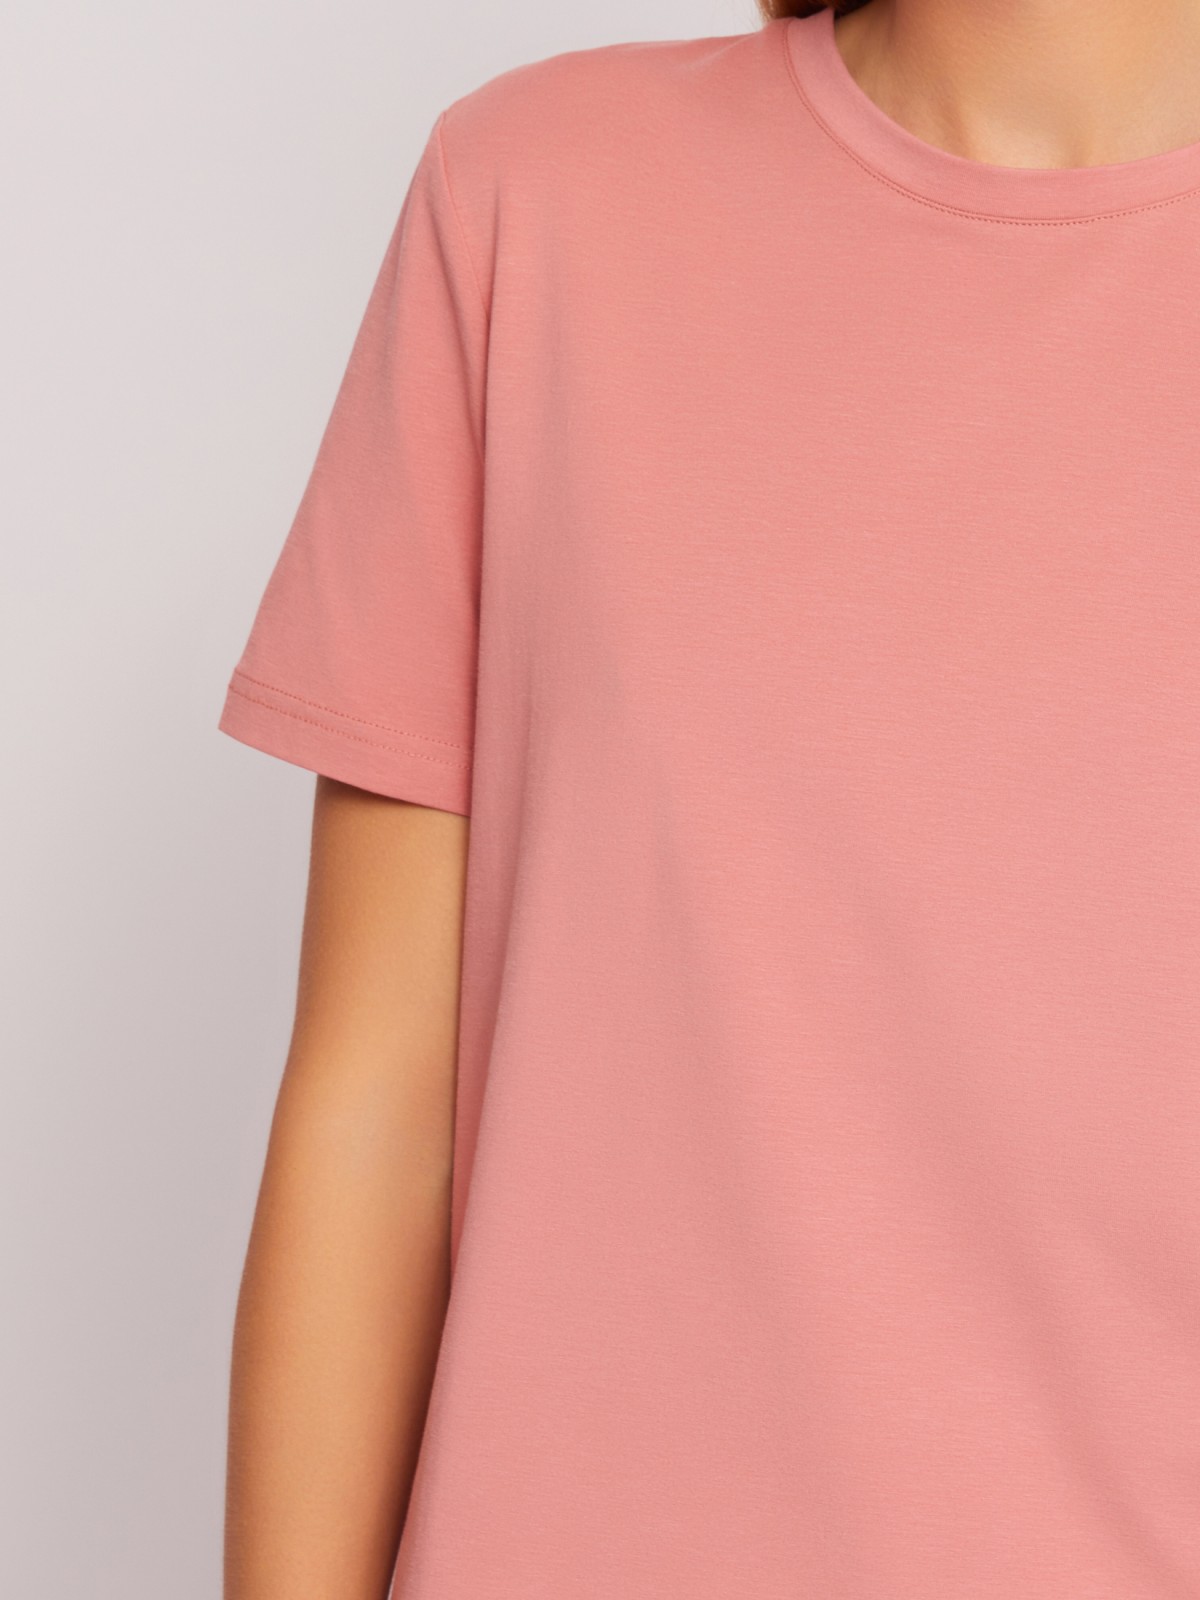 Трикотажная футболка с коротким рукавом zolla 024213259012, цвет кораловый, размер S - фото 4